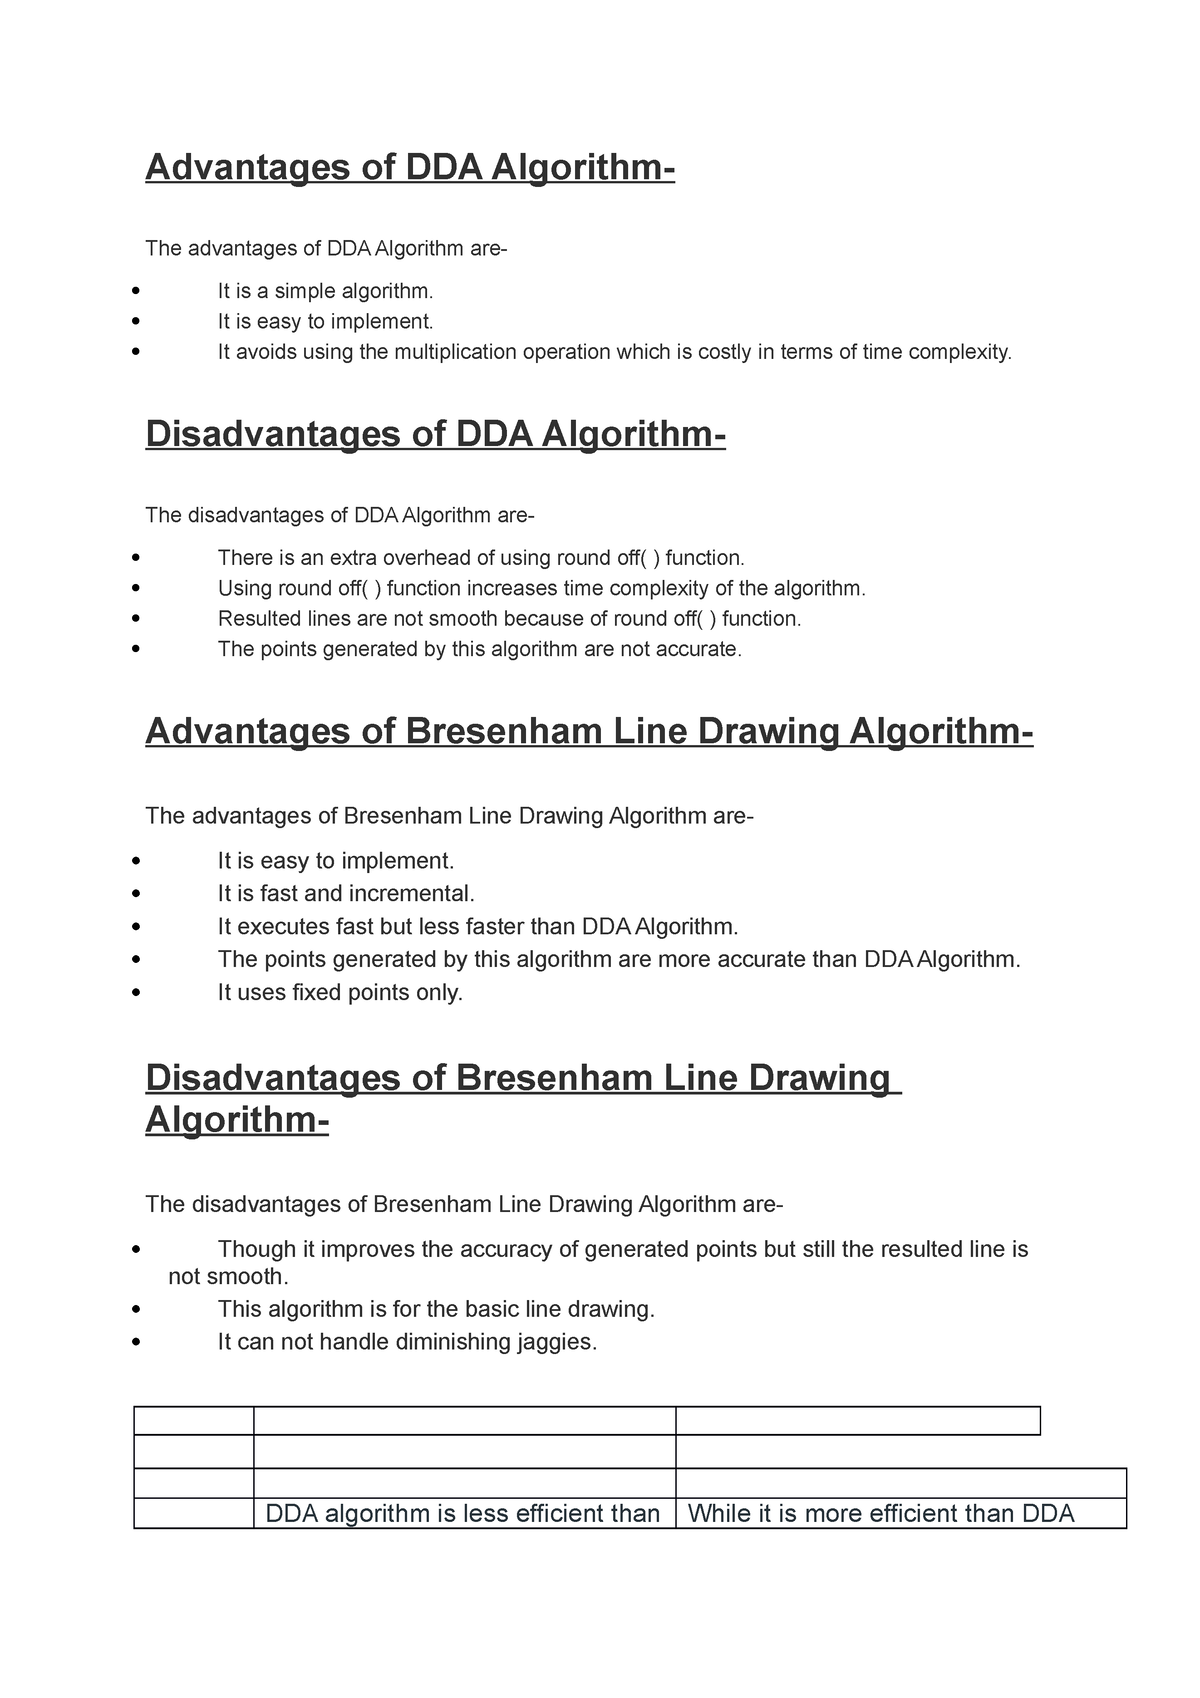 Differnece BW Digitial Differential Analyzer LDA and Bresenhams LDA | PDF |  Algorithms | Arithmetic